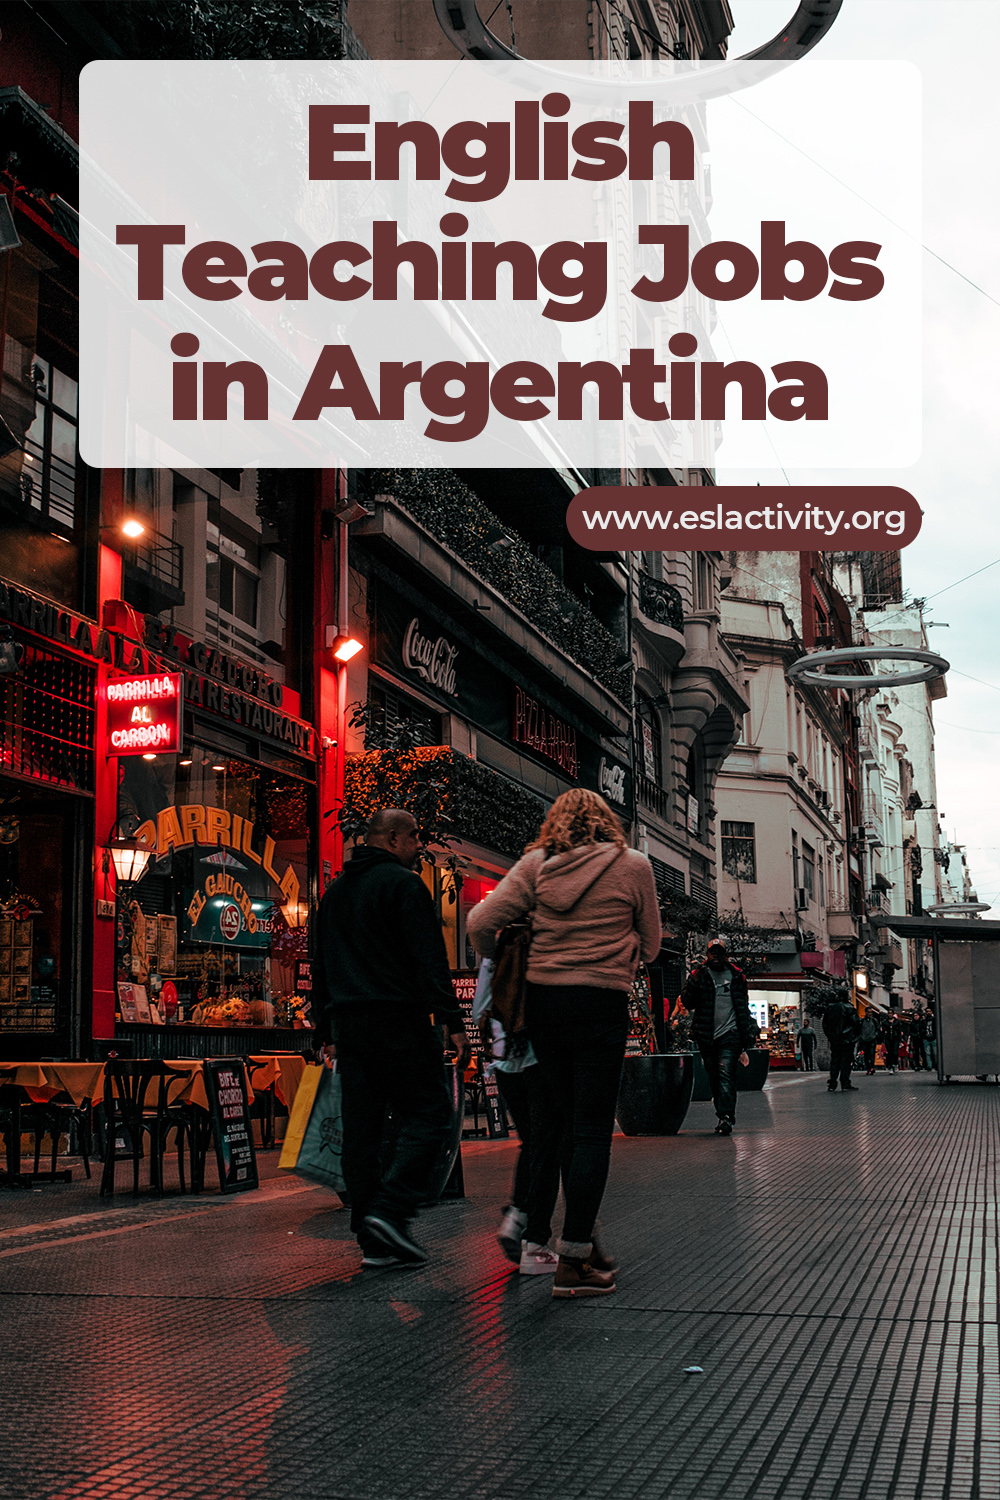 English Teaching Jobs in Argentina